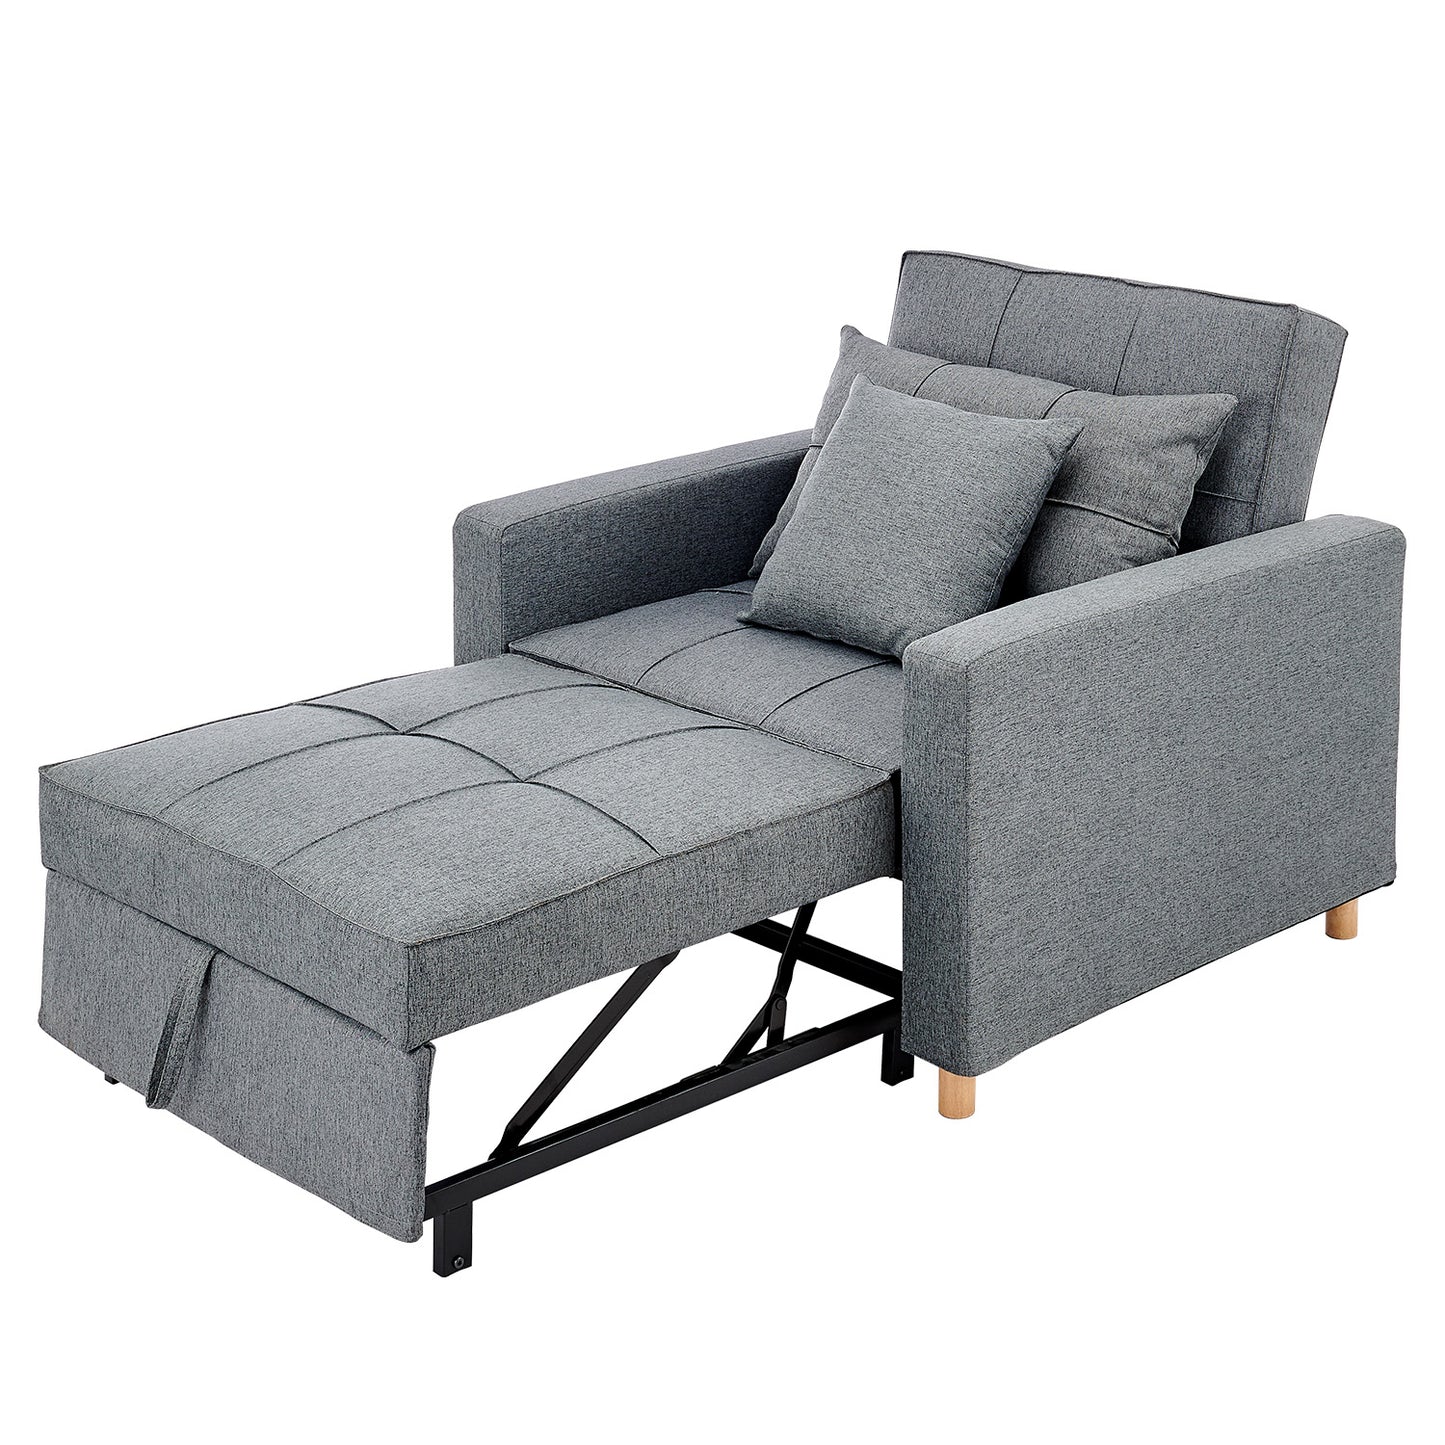 Suri 3-in-1 Convertible Sofa Chair Bed by Sarantino - Grey